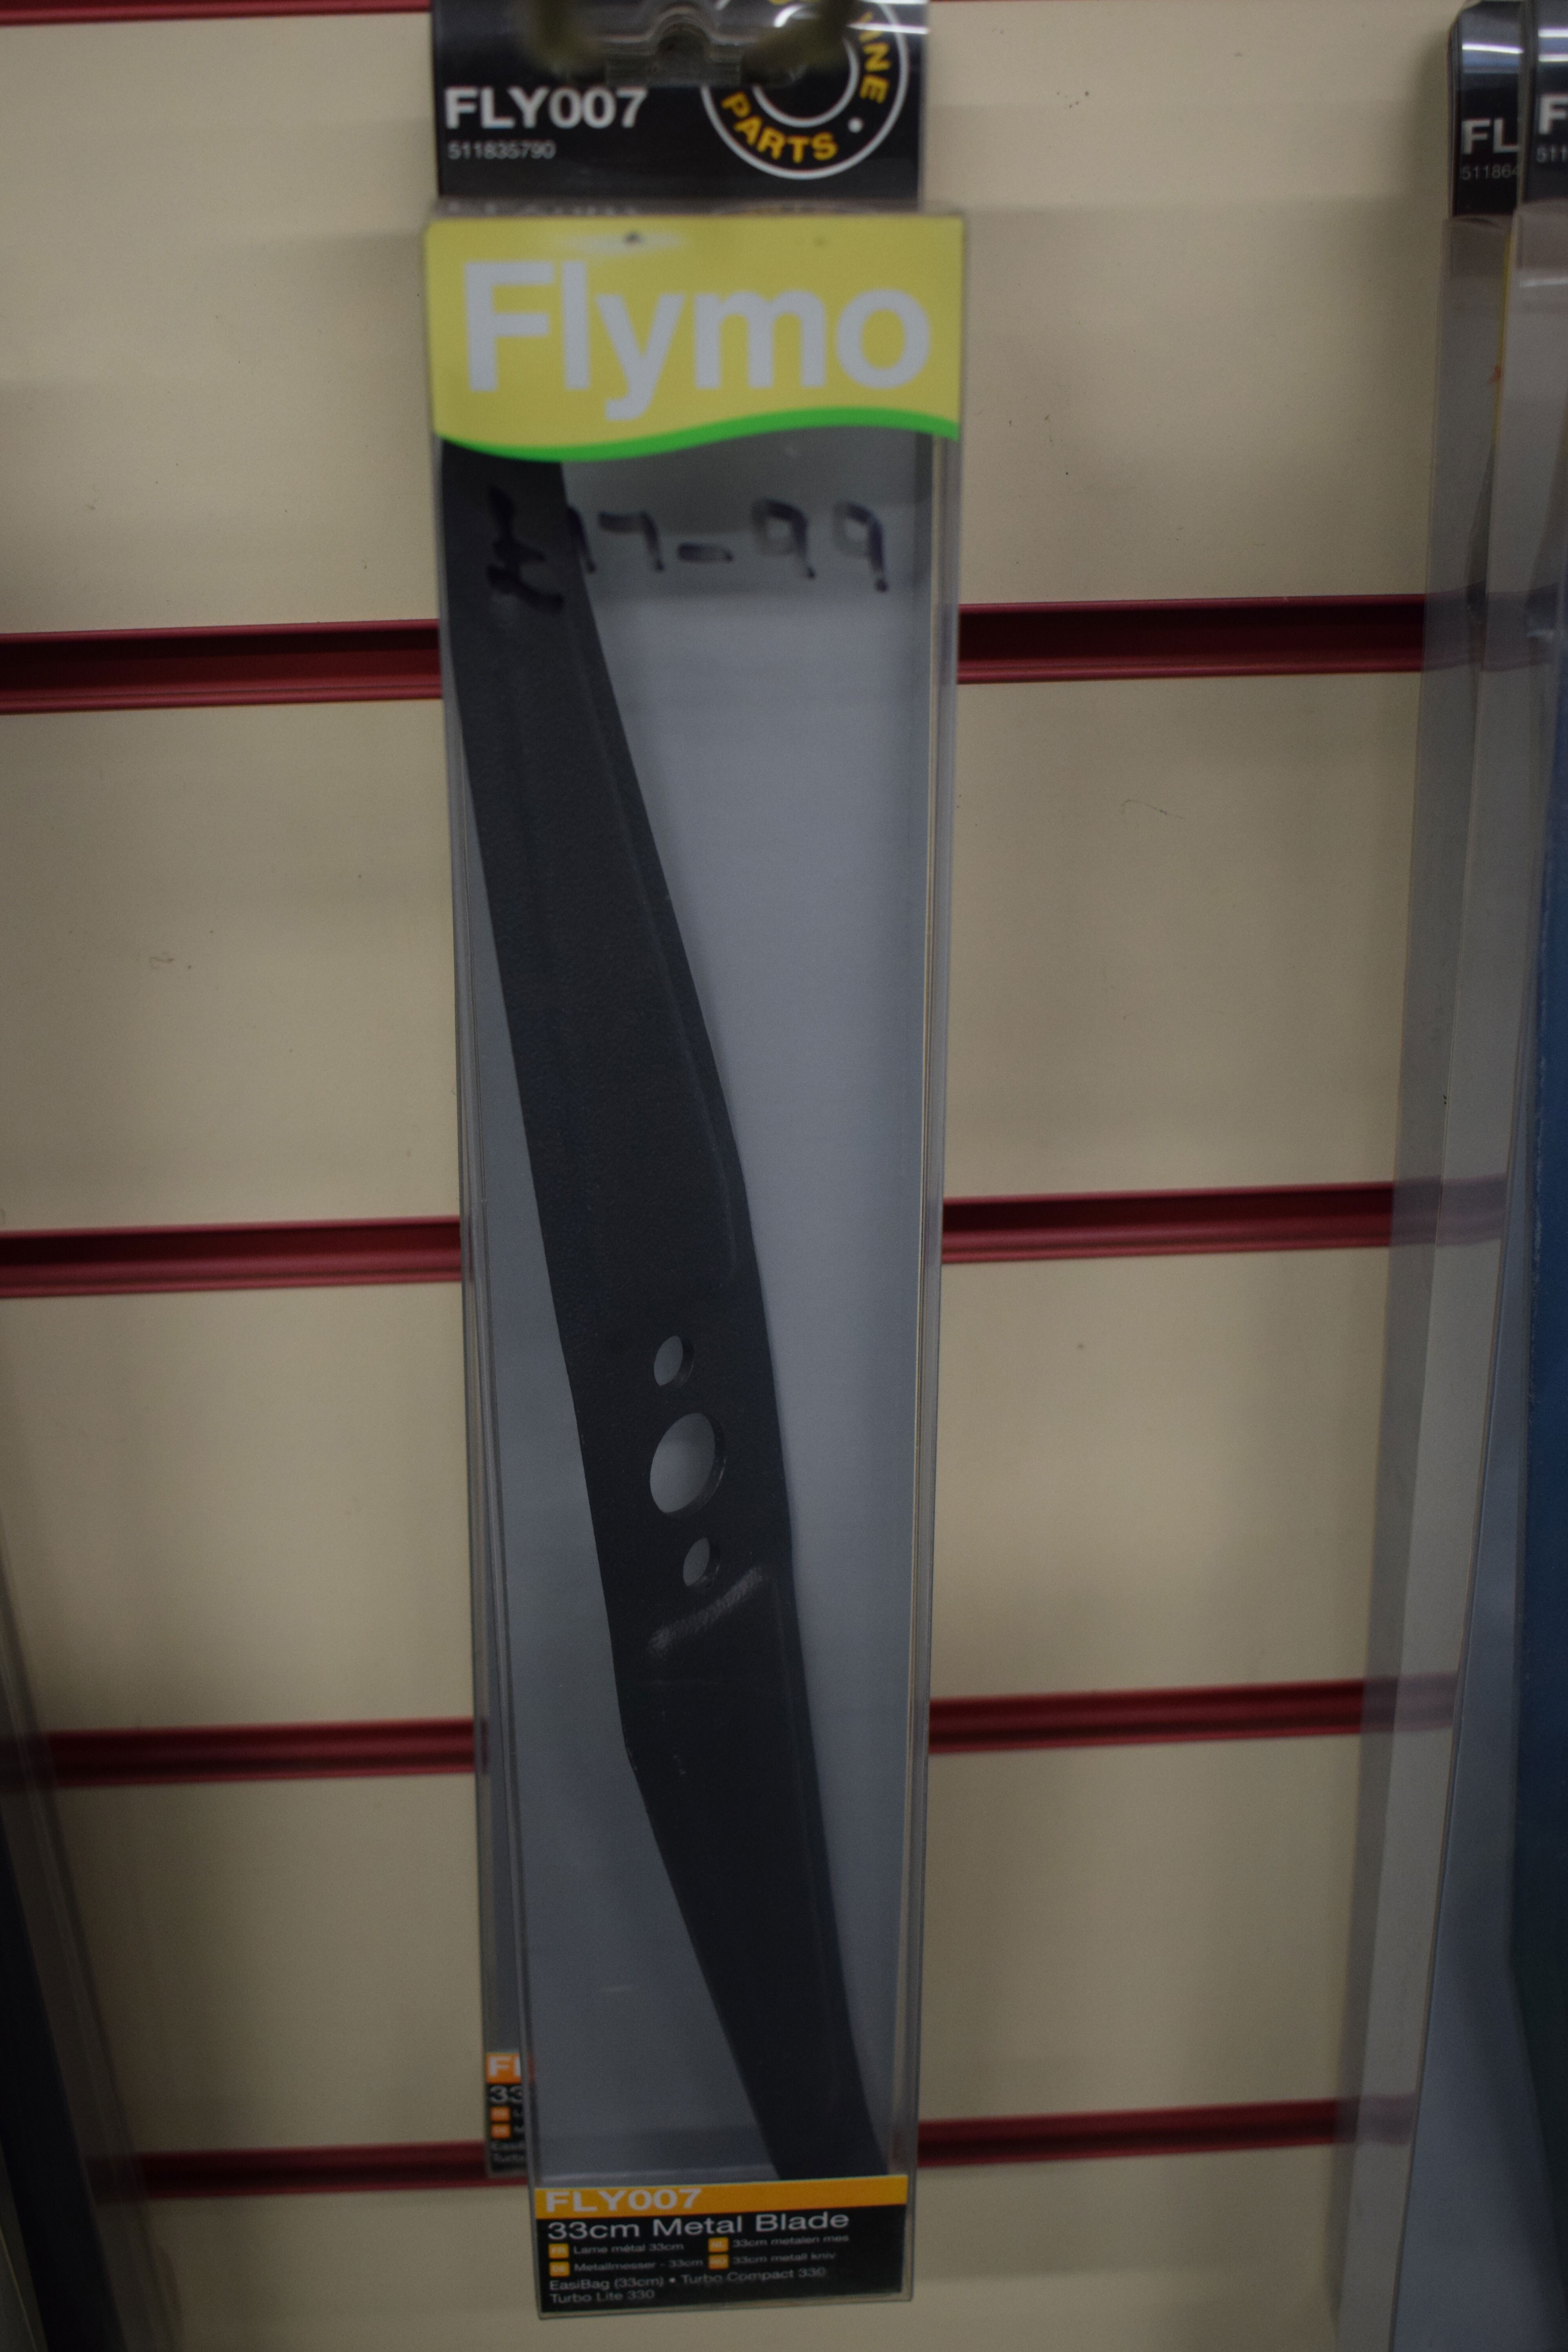 33cm Metal Blade